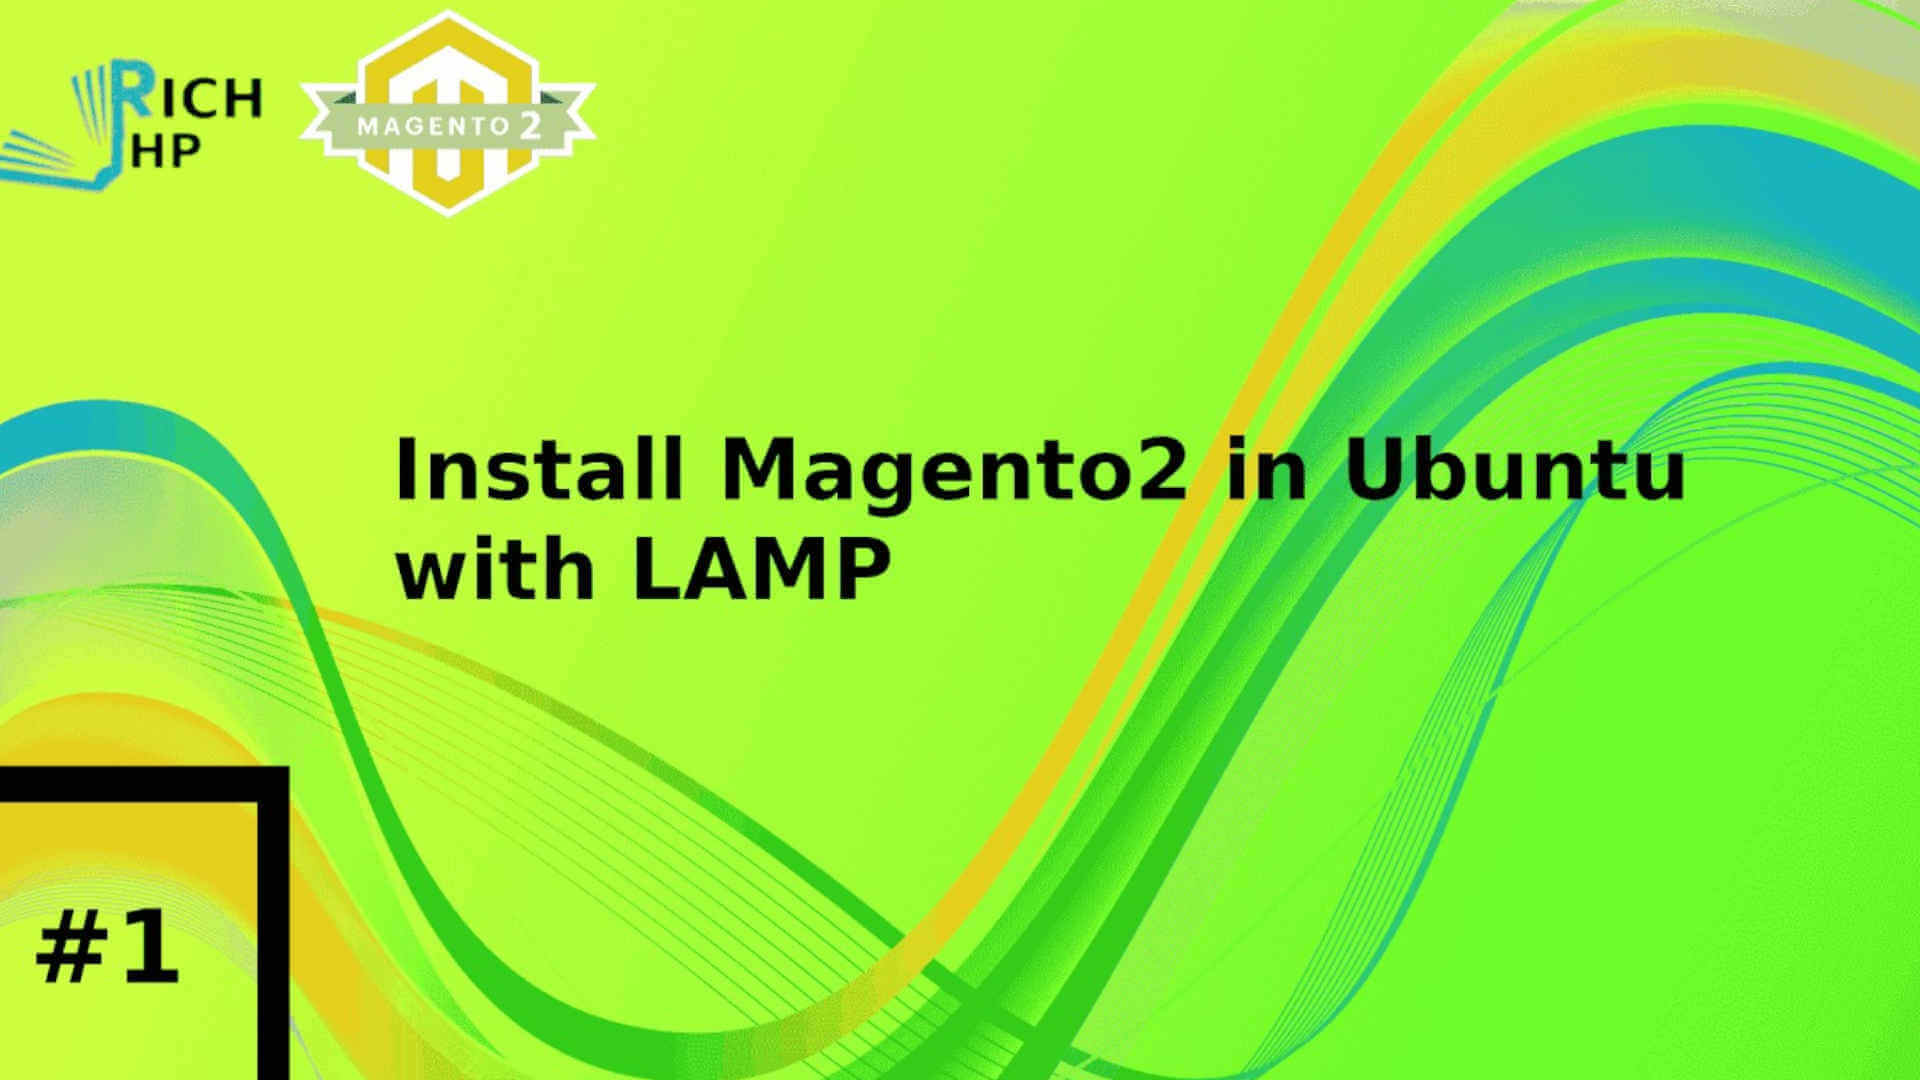 Magento 2 Tutorial 1 - Install Magento2 in Ubuntu - Rich PHP